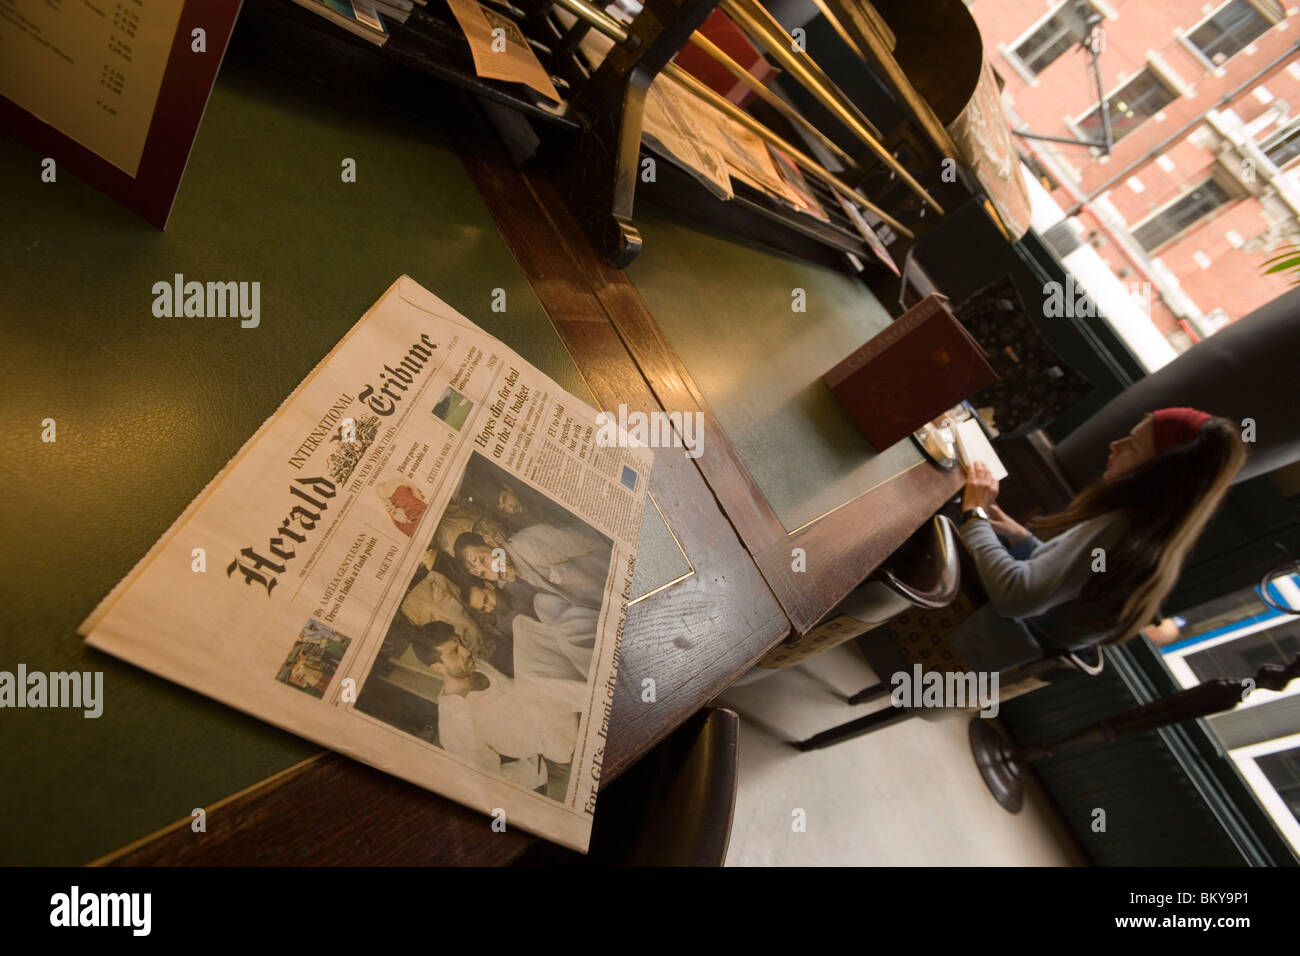 Giornale, Donna, Cafe Americain, Leidseplein, giovane donna seduta al Cafe Americain, lettura e mangiare, giornale giacente sulla scheda Foto Stock